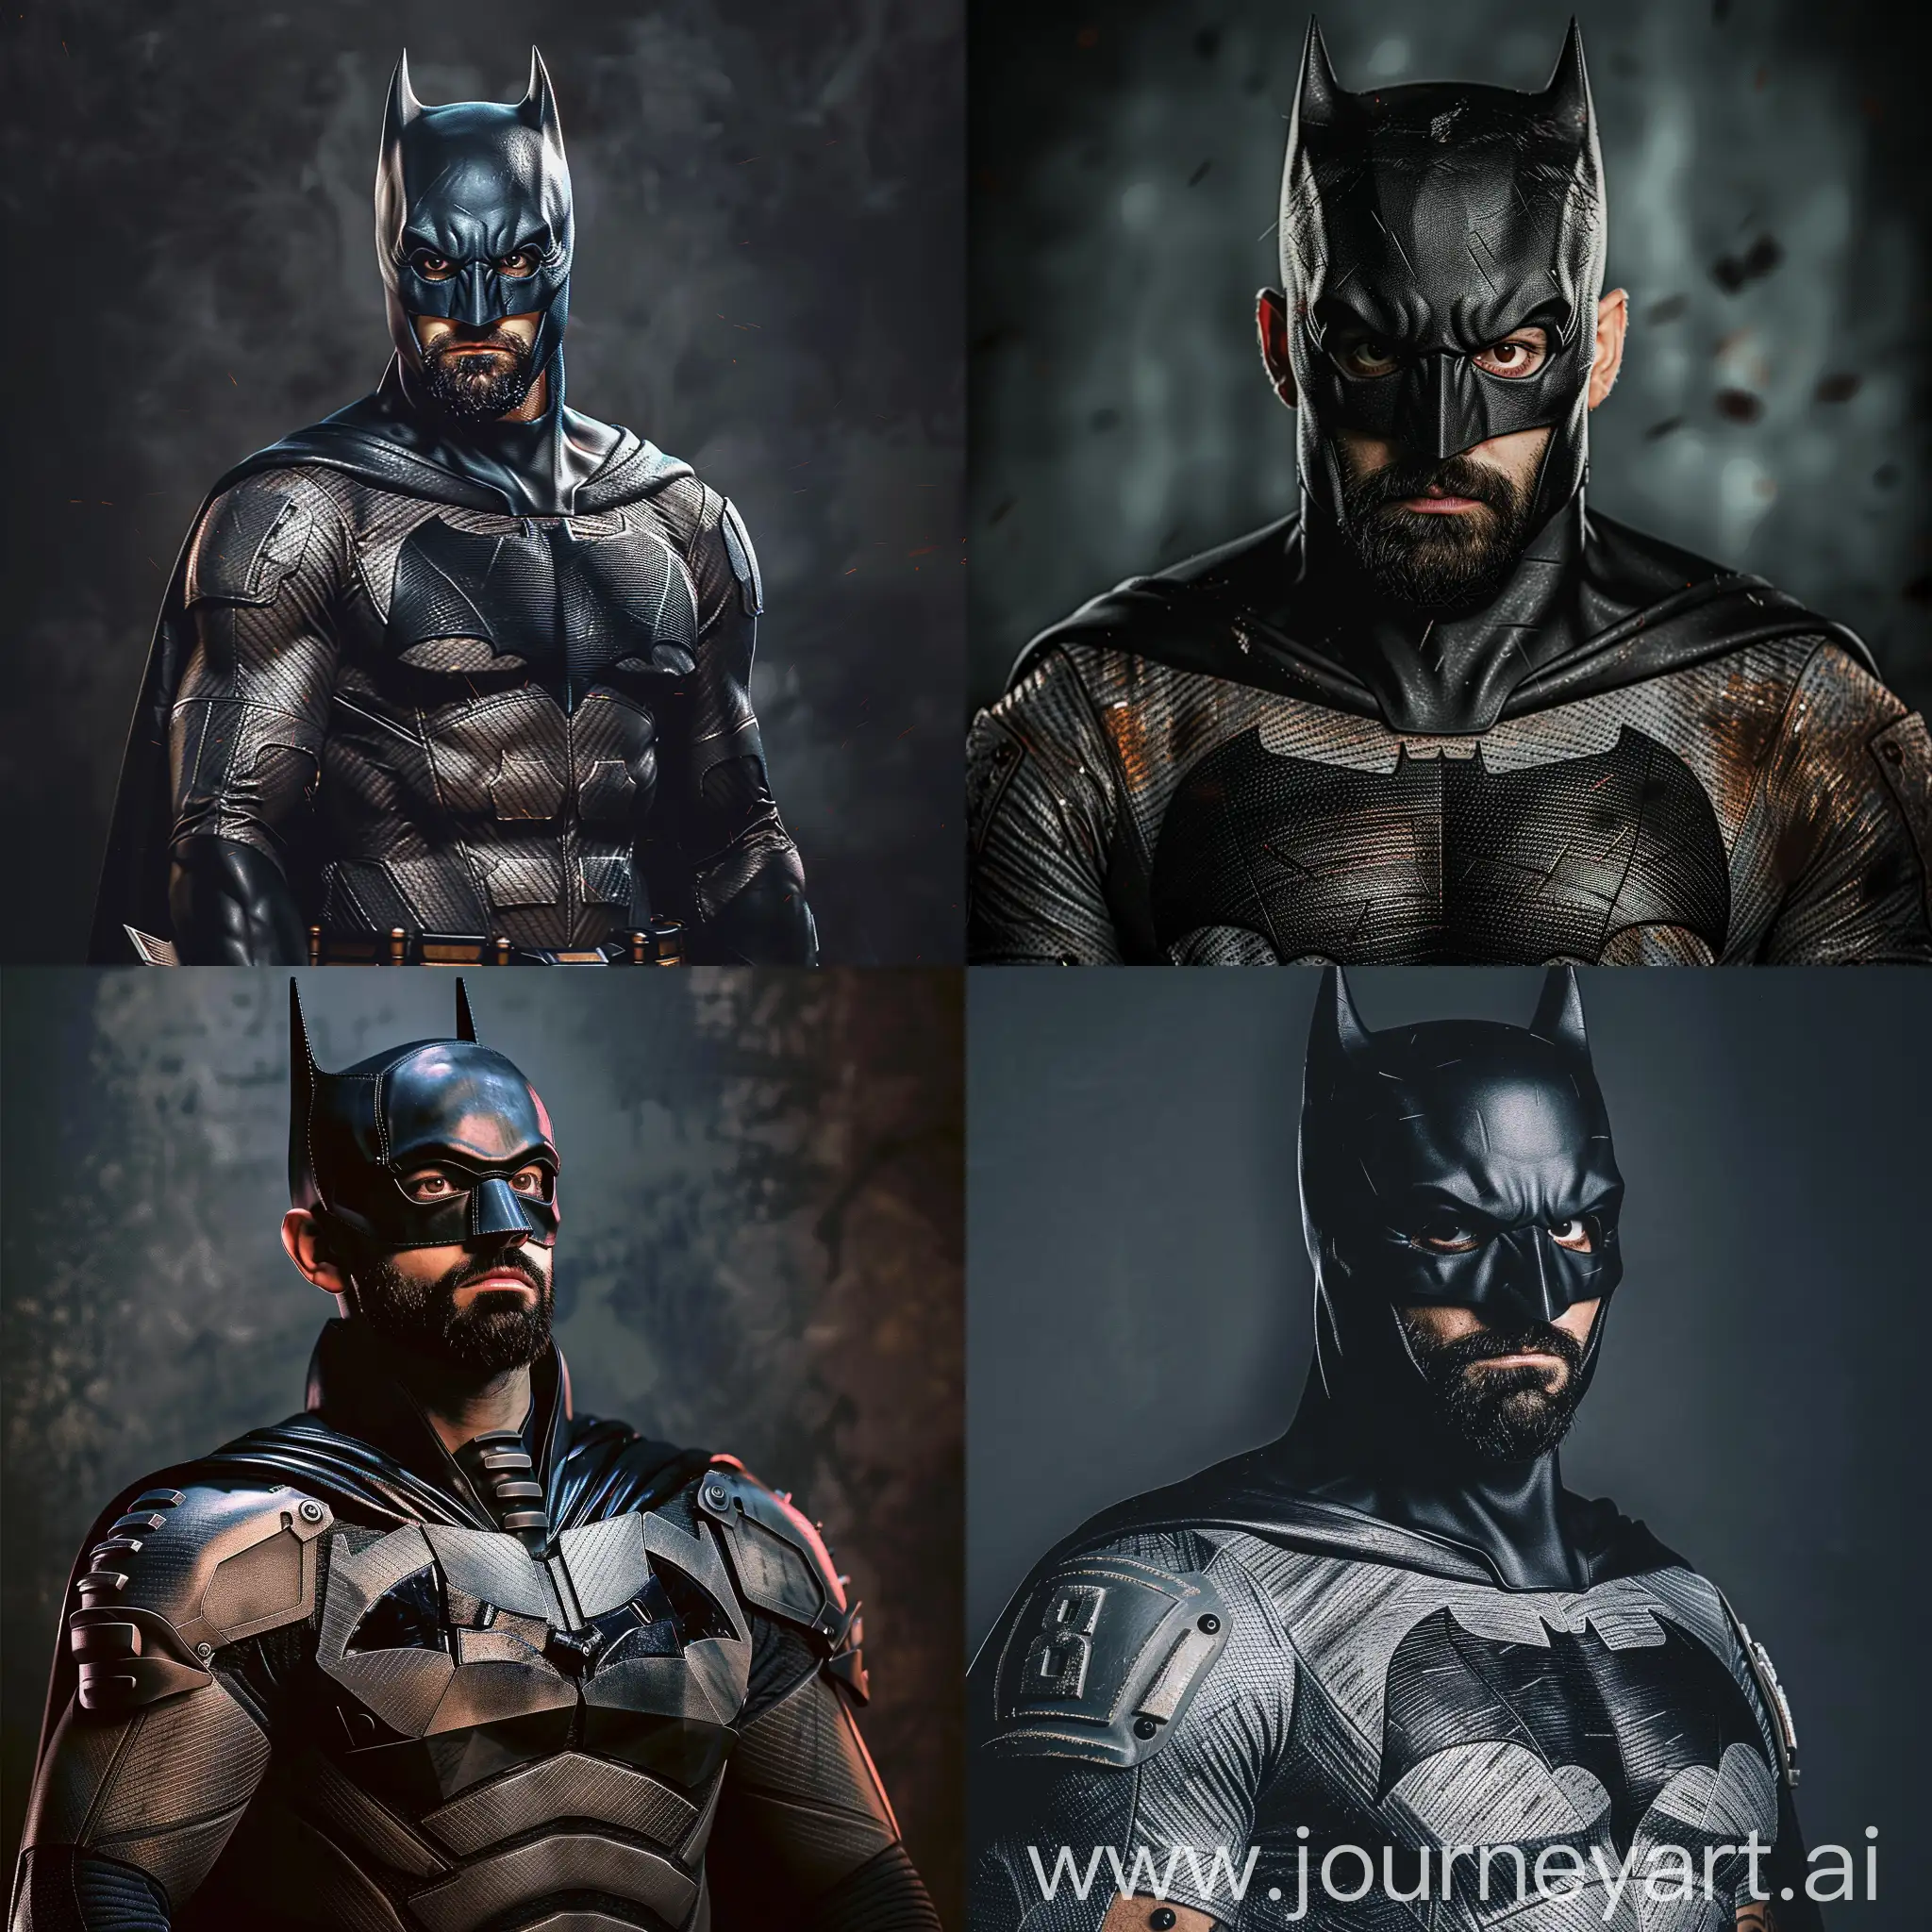 Virat-Kohli-Portrayed-as-Batman-in-HighResolution-8K-Image